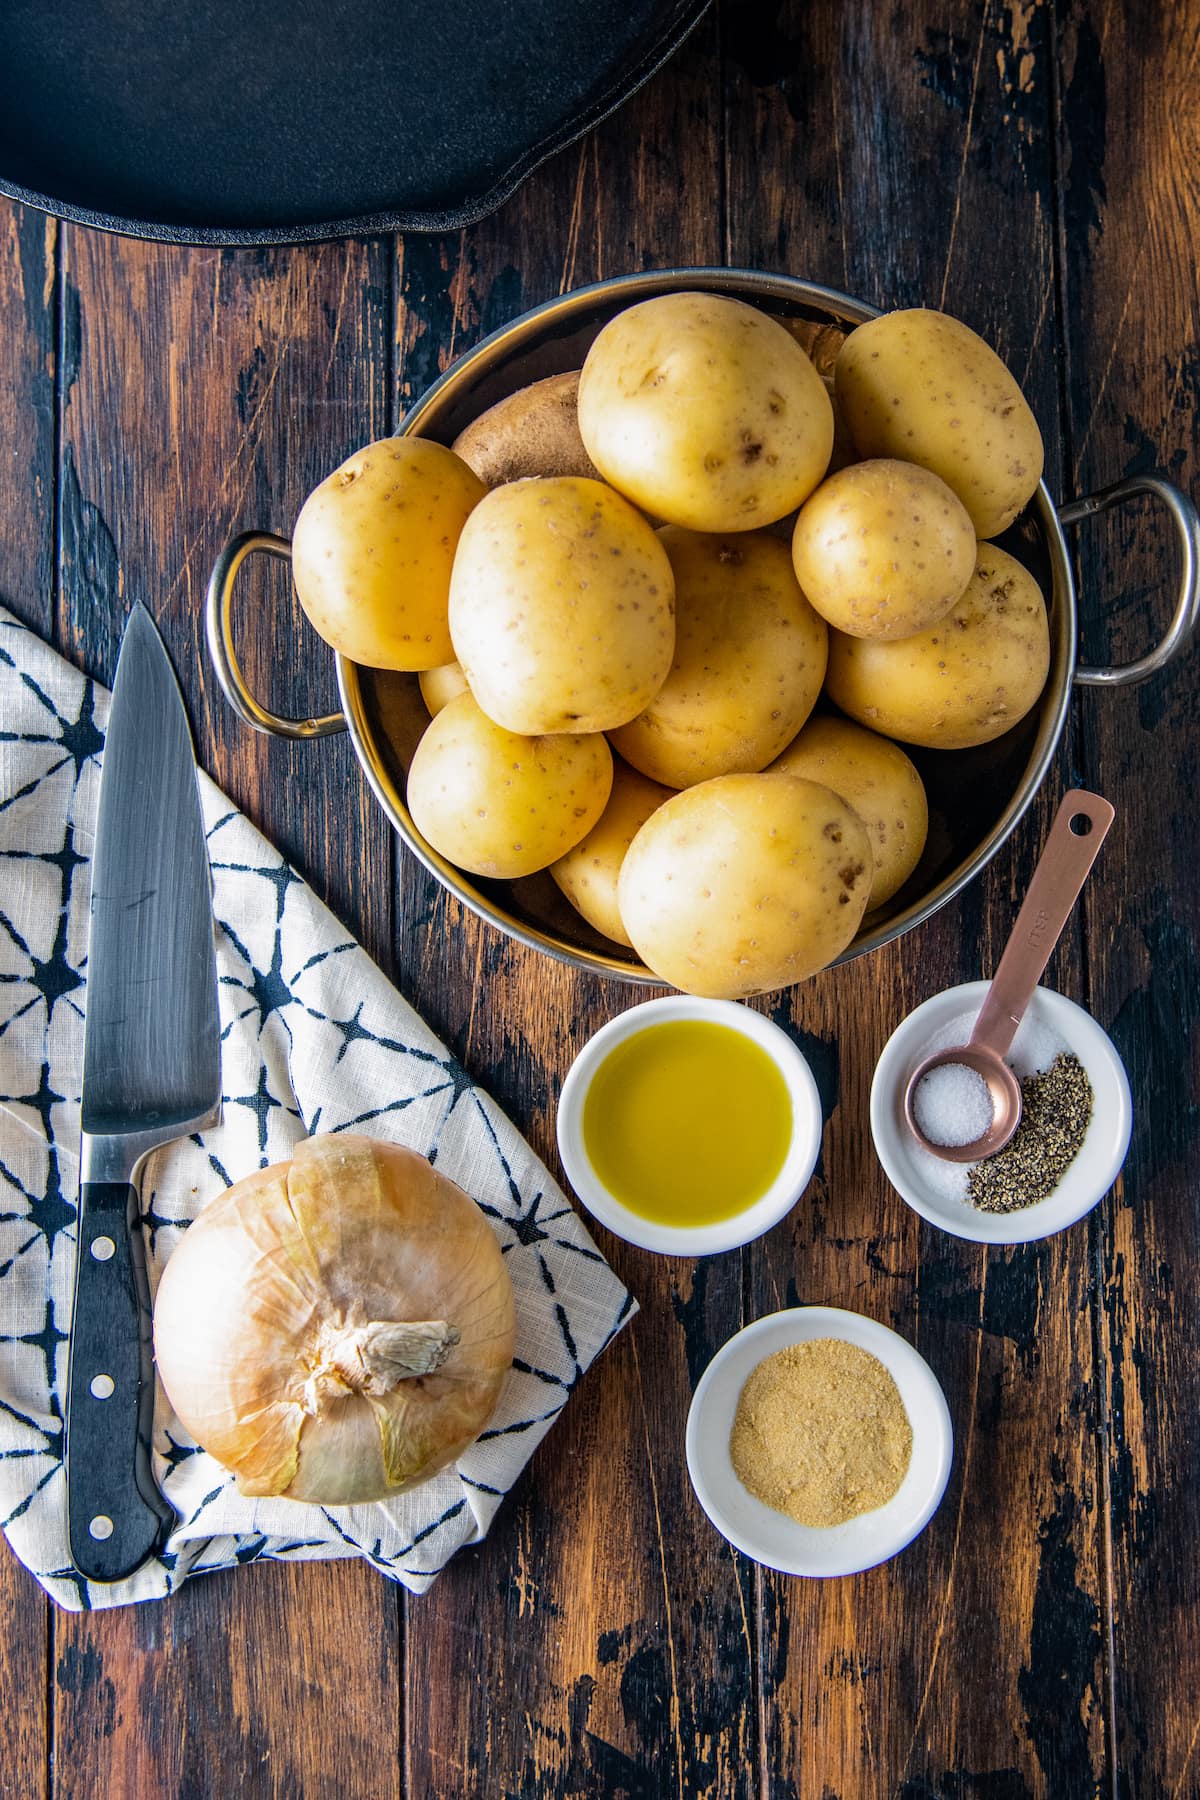 a bowl of potatoes alongside an onion, olive oil, garlic powder, salt and pepper